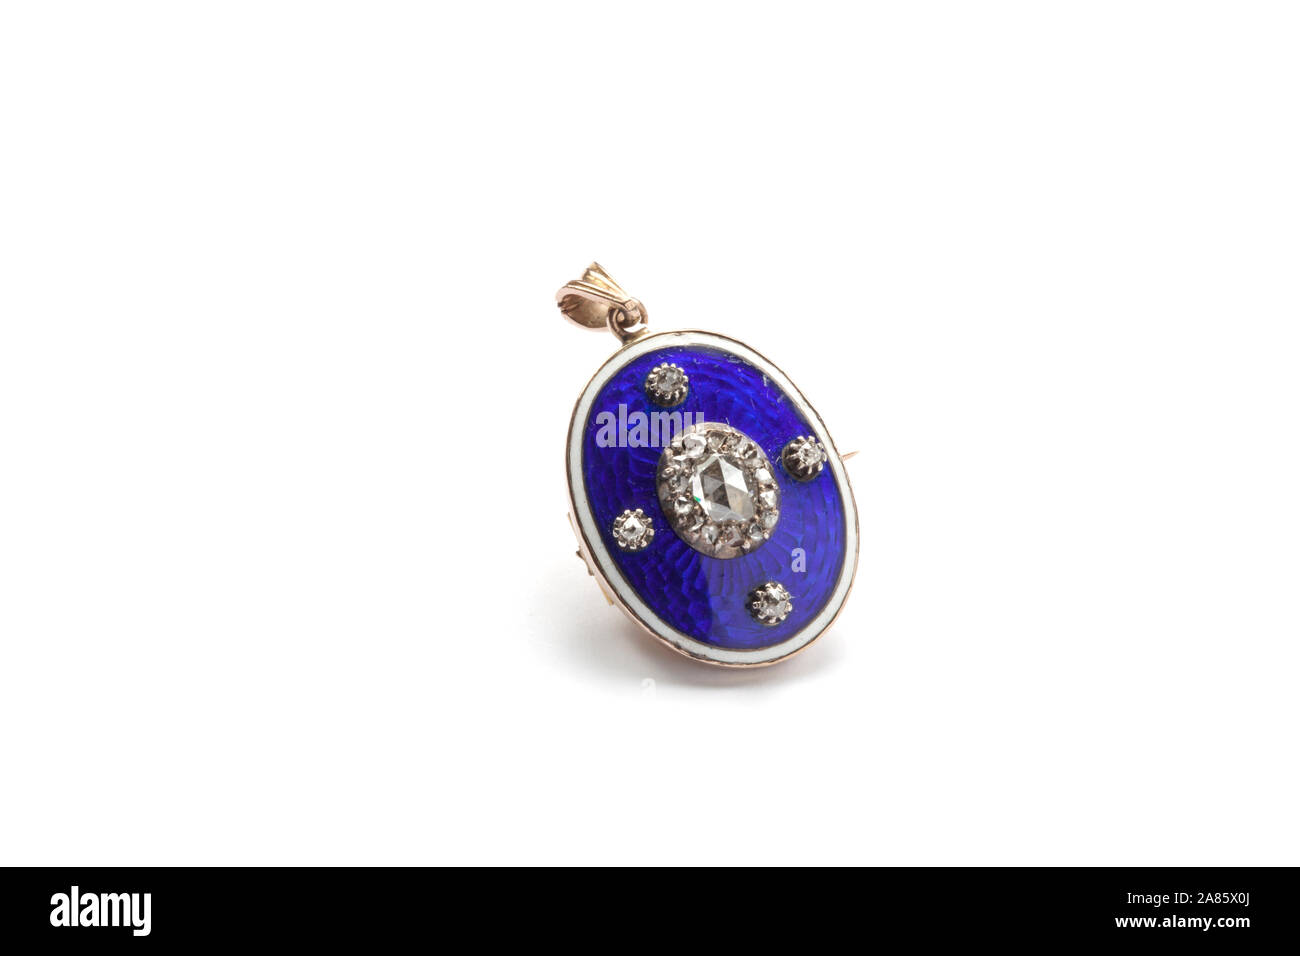 !9th cetury enamel diamond necklace blue pendant. Stock Photo